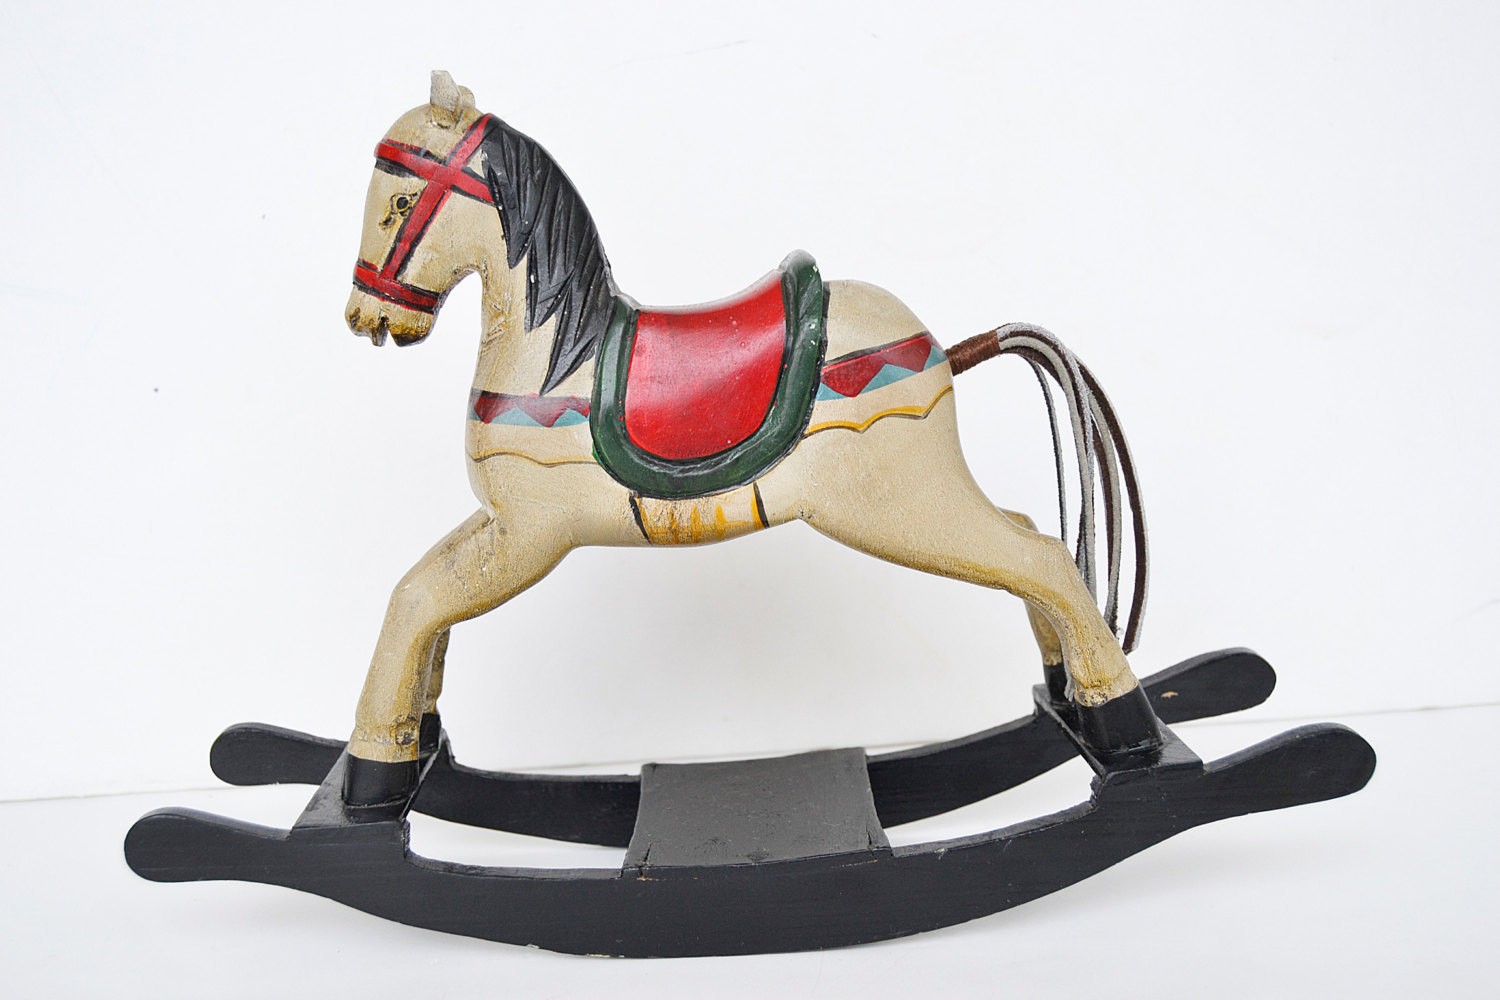 Rocking horse toy vintage wood